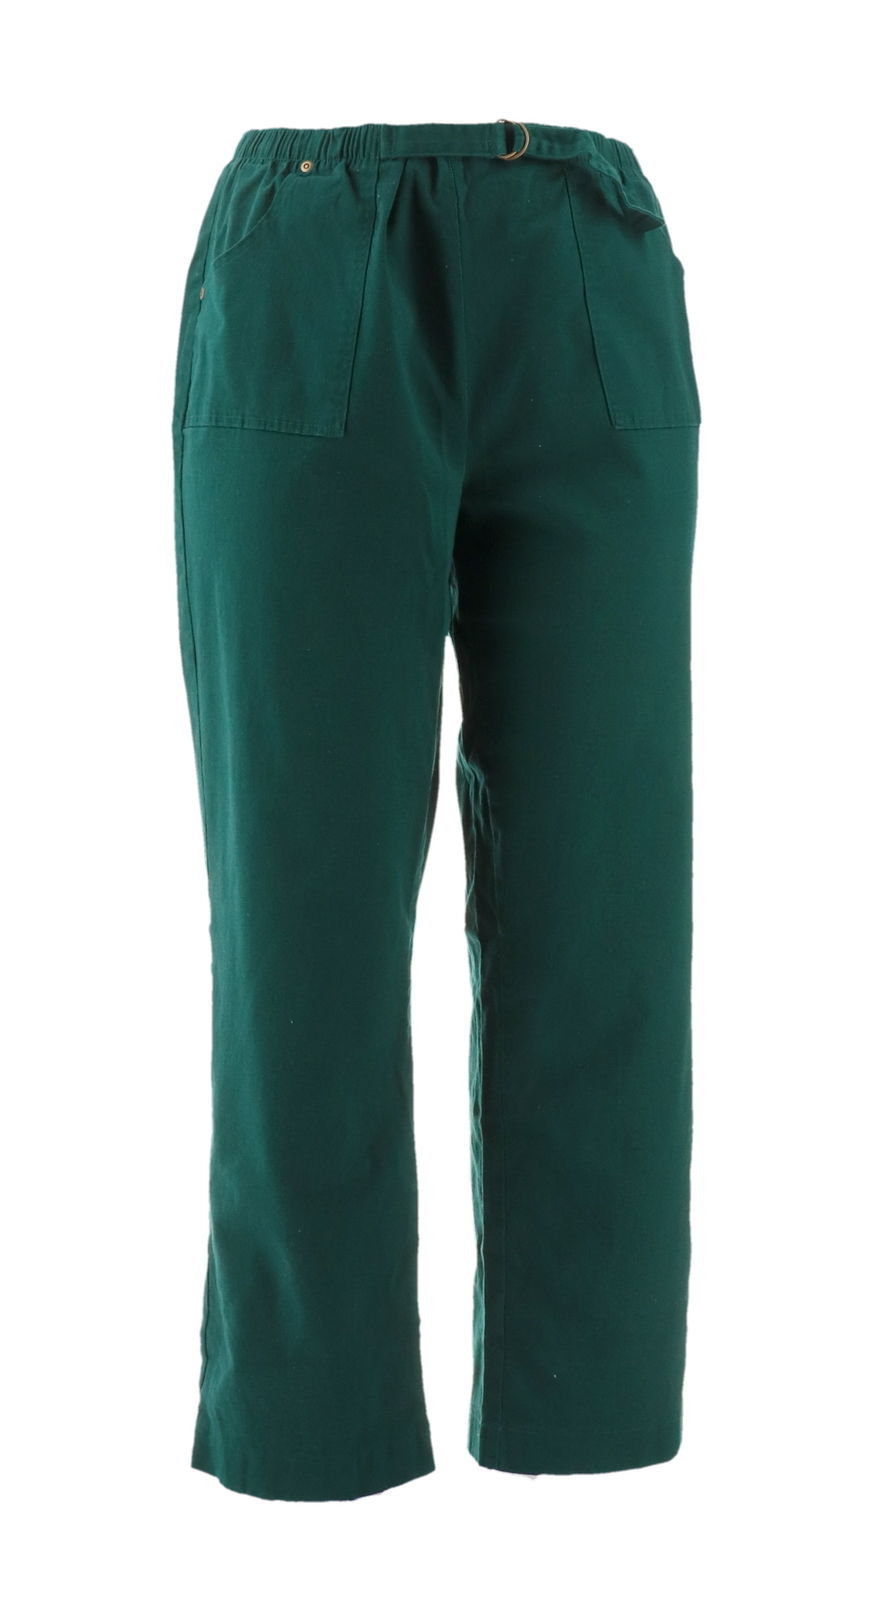 Denim & Co Tall Orig Waist Stretch Denim Pull-On Pants Evergreen 2X NEW A69563 - $21.76